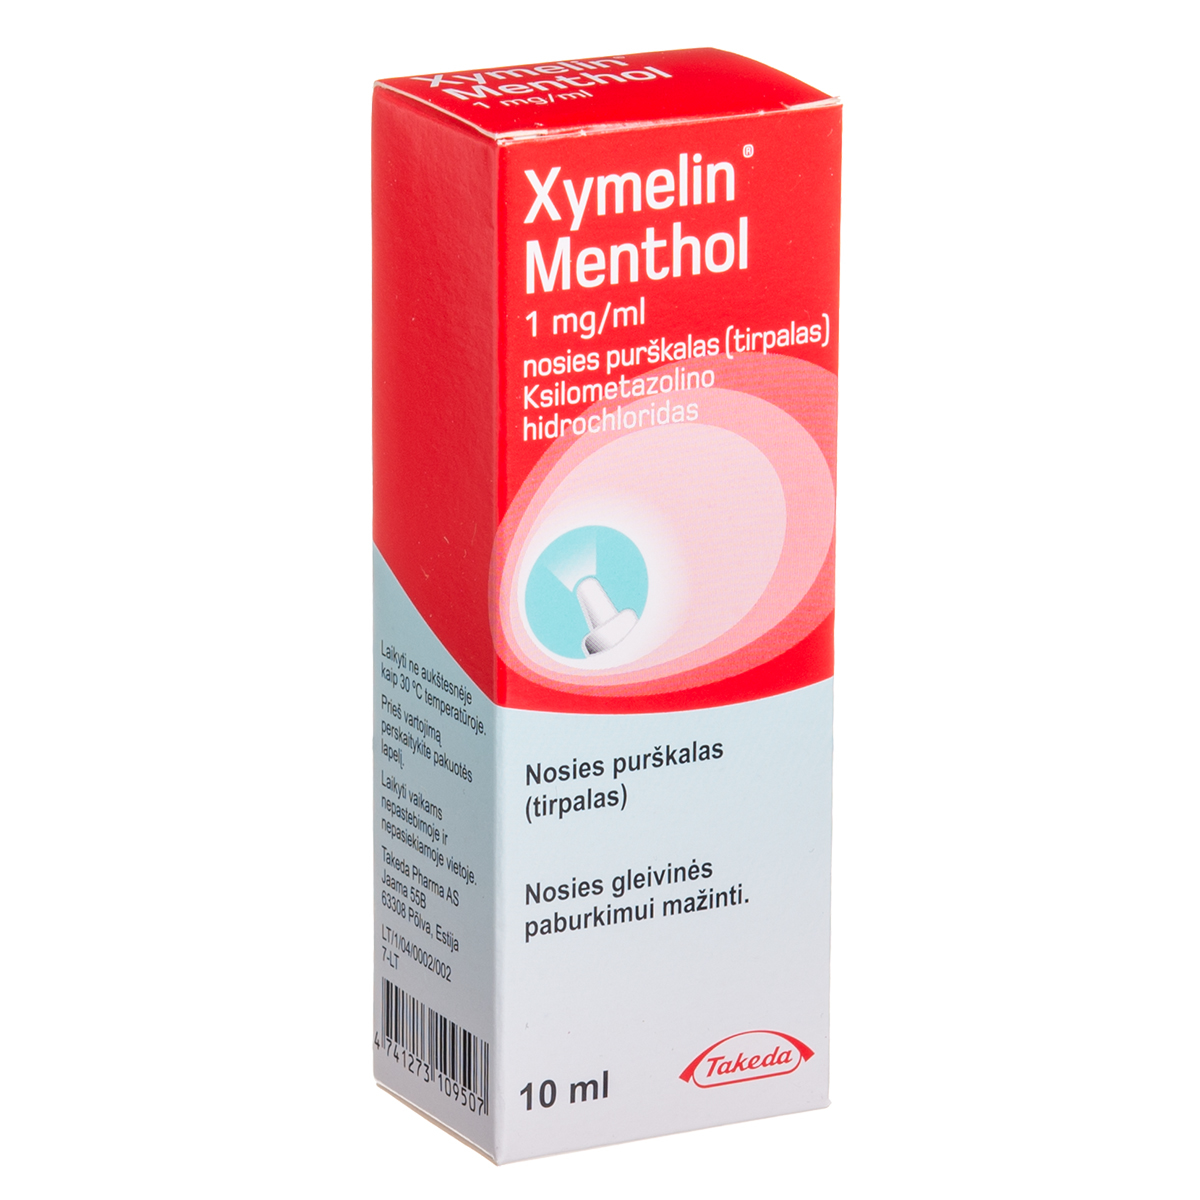 XYMELIN MENTHOL, 1 mg/ml, nosies purškalas (tirpalas), 10 ml